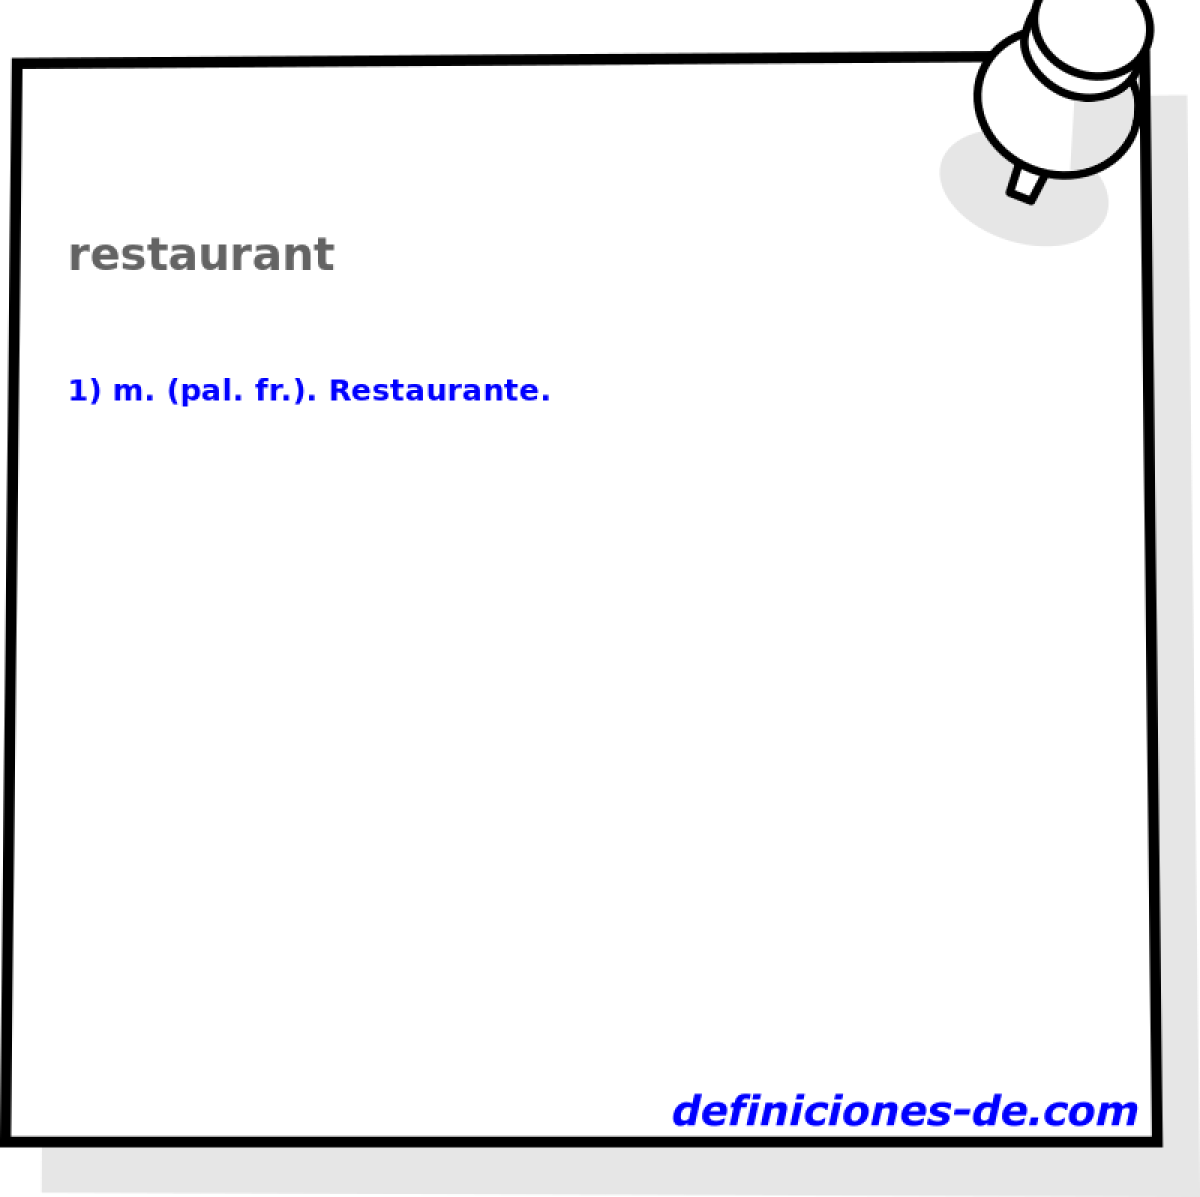 restaurant 